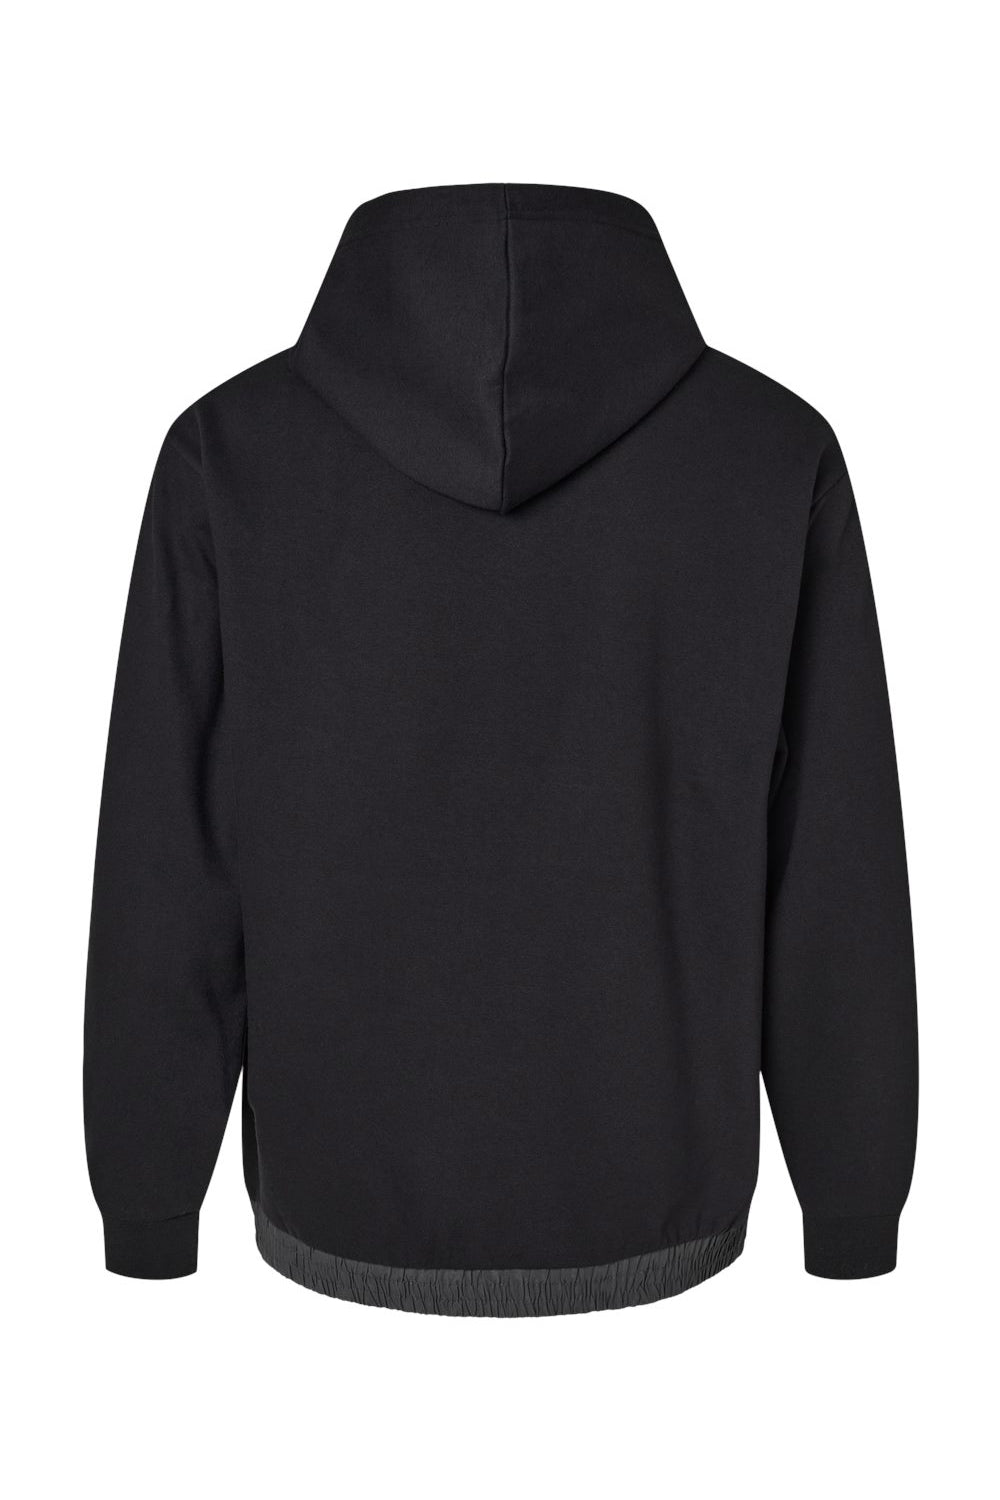 MV Sport 23112 Mens Mixed Media Hooded Sweatshirt Hoodie Black/Charcoal Grey Flat Back